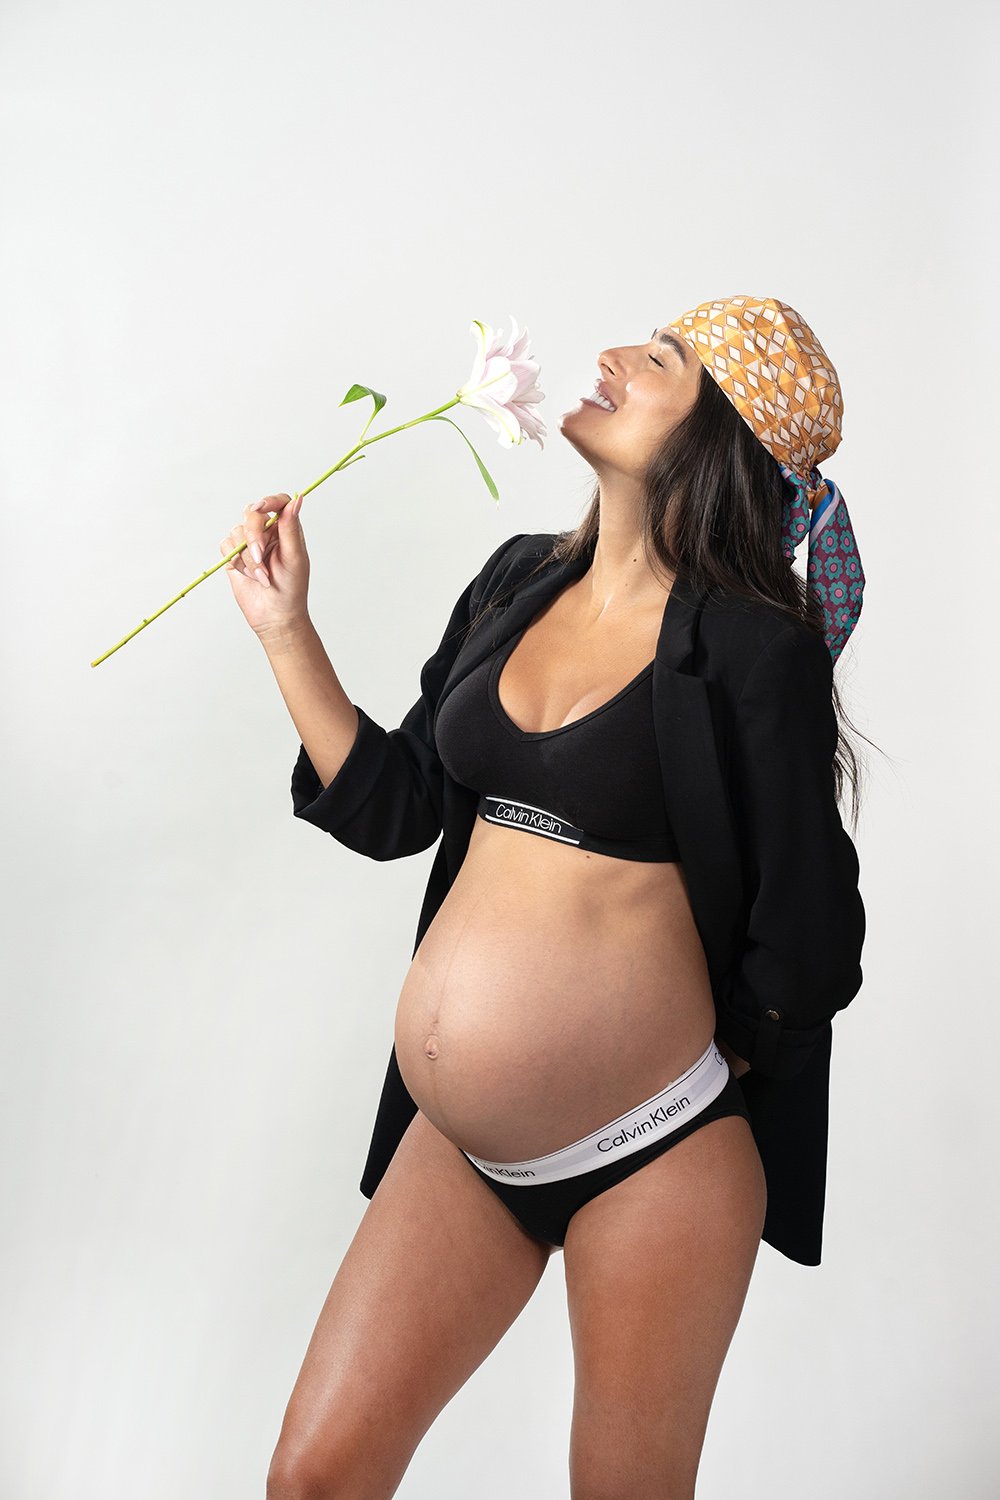 Preganacy Maternity Photographer Jason Todd.jpg